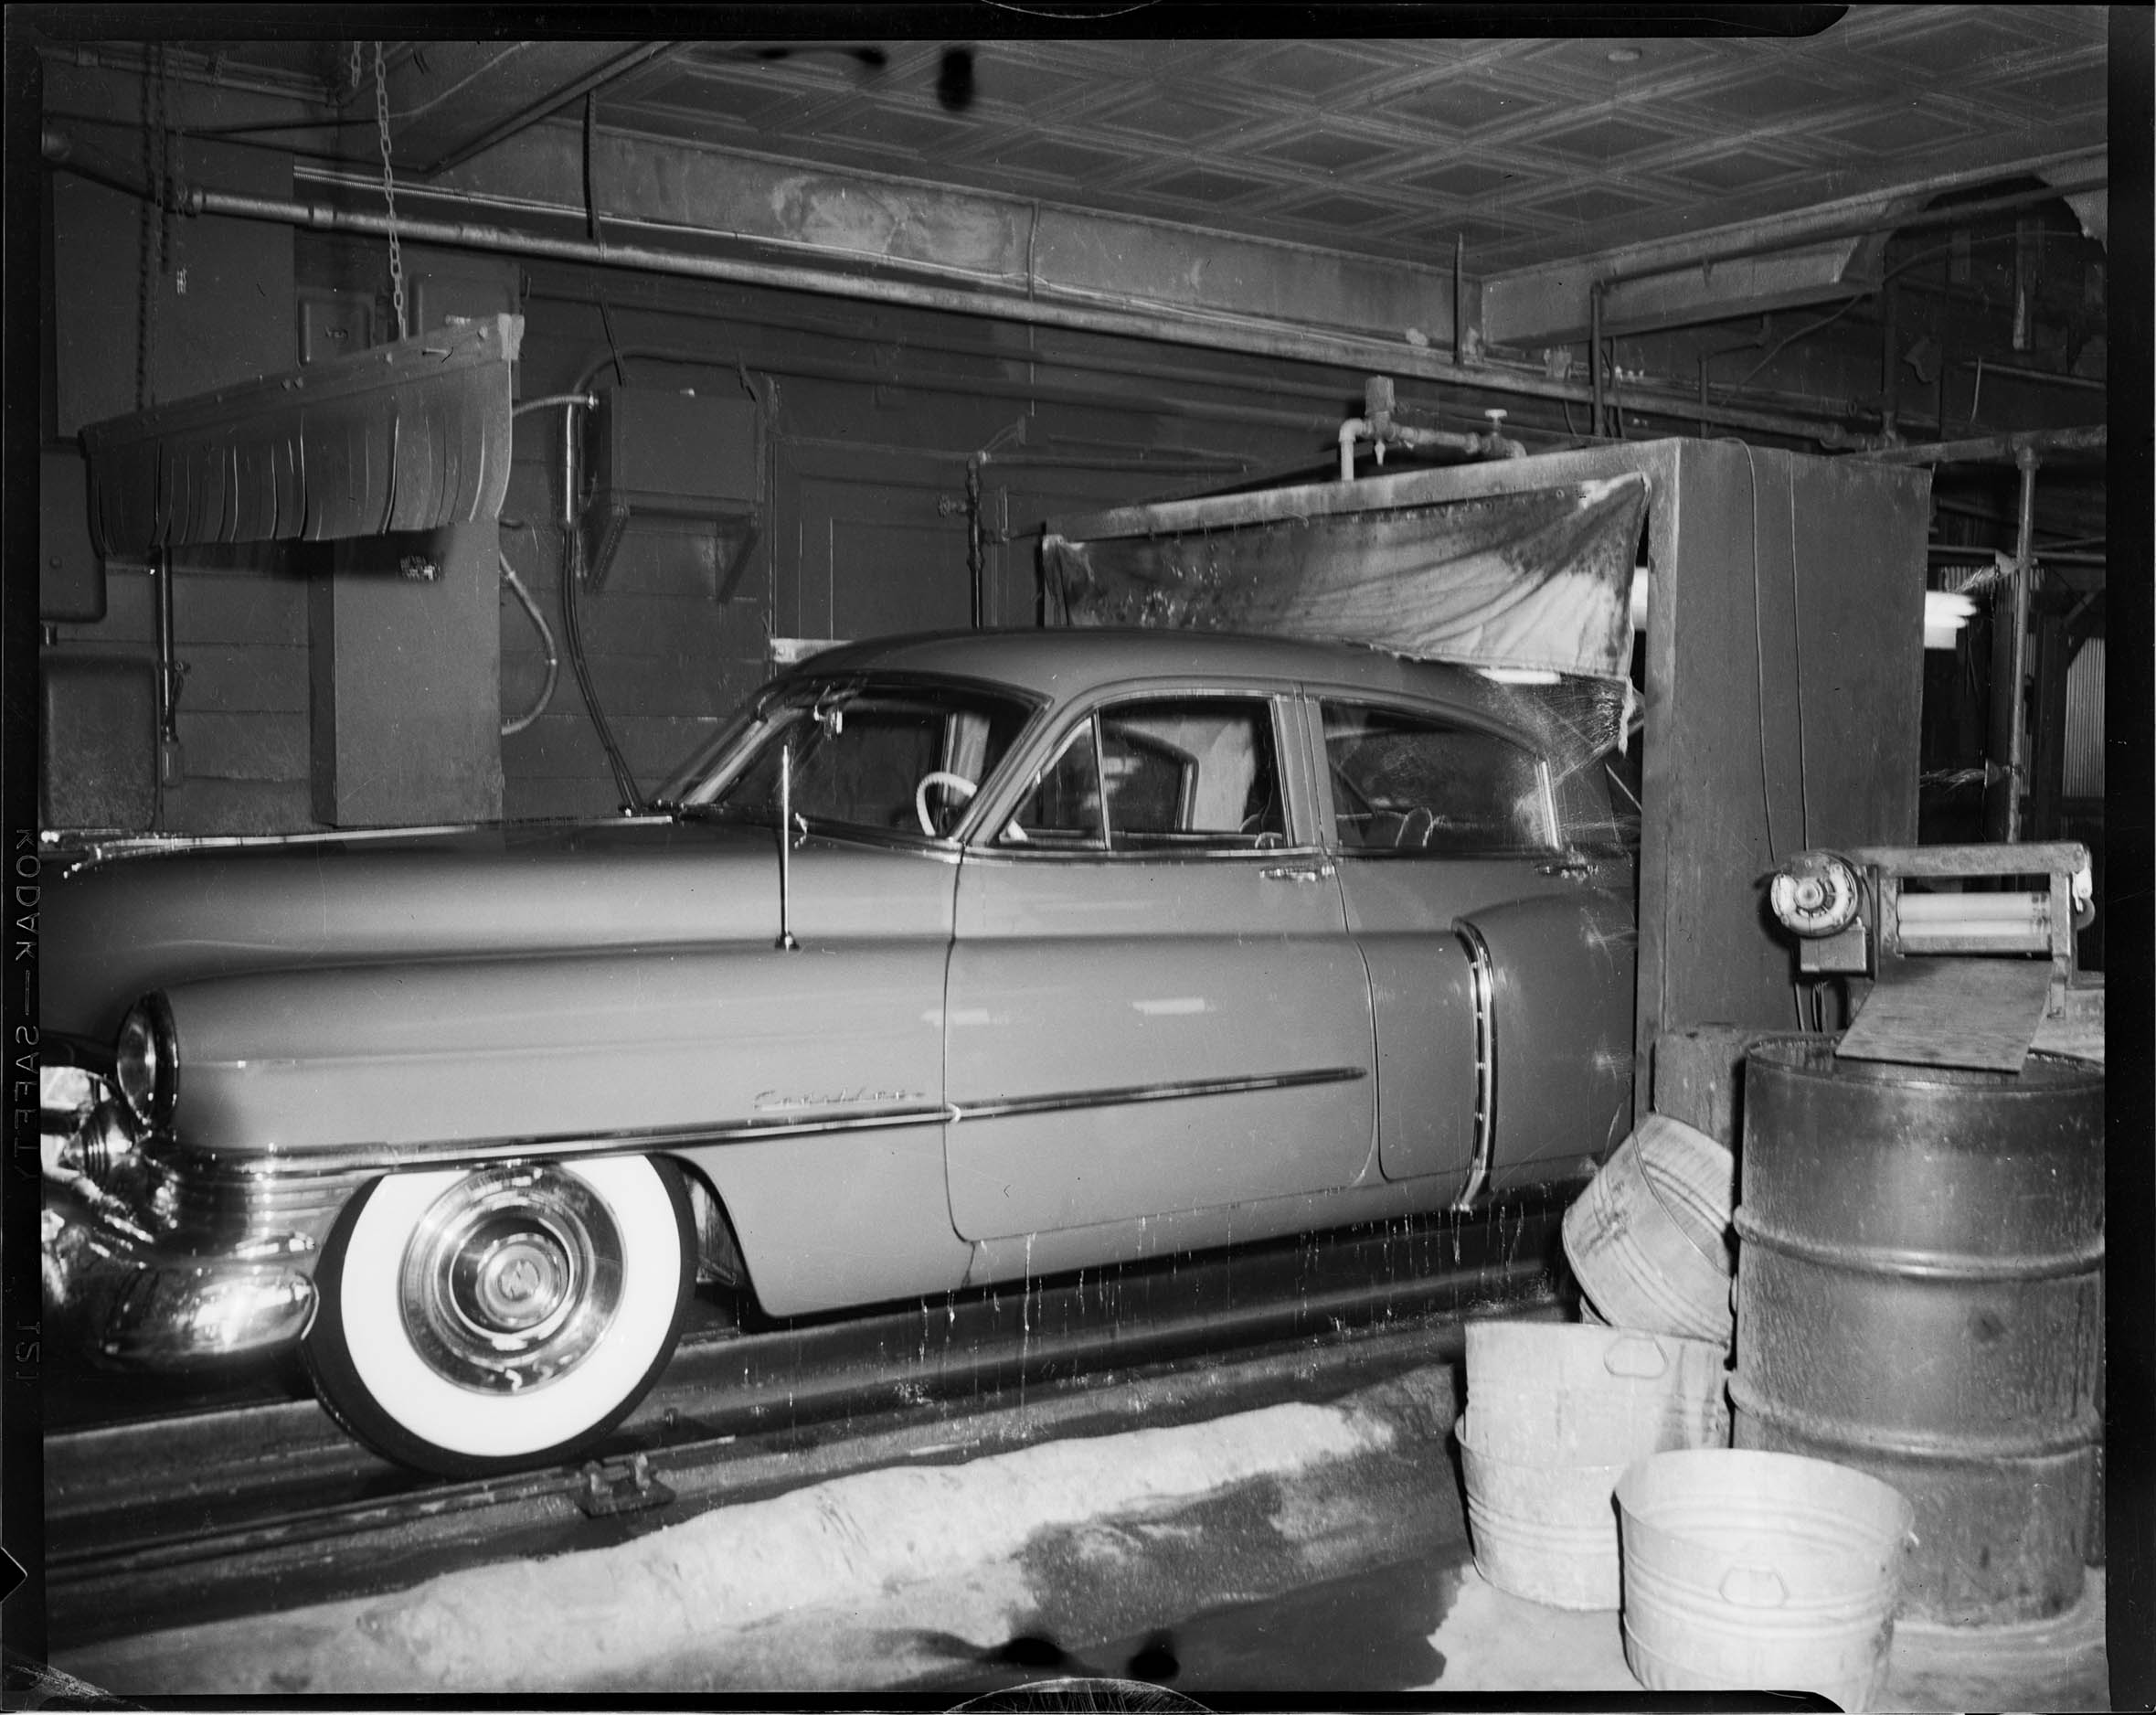 Charles "Teenie" Harris Archive Image of a car in storage